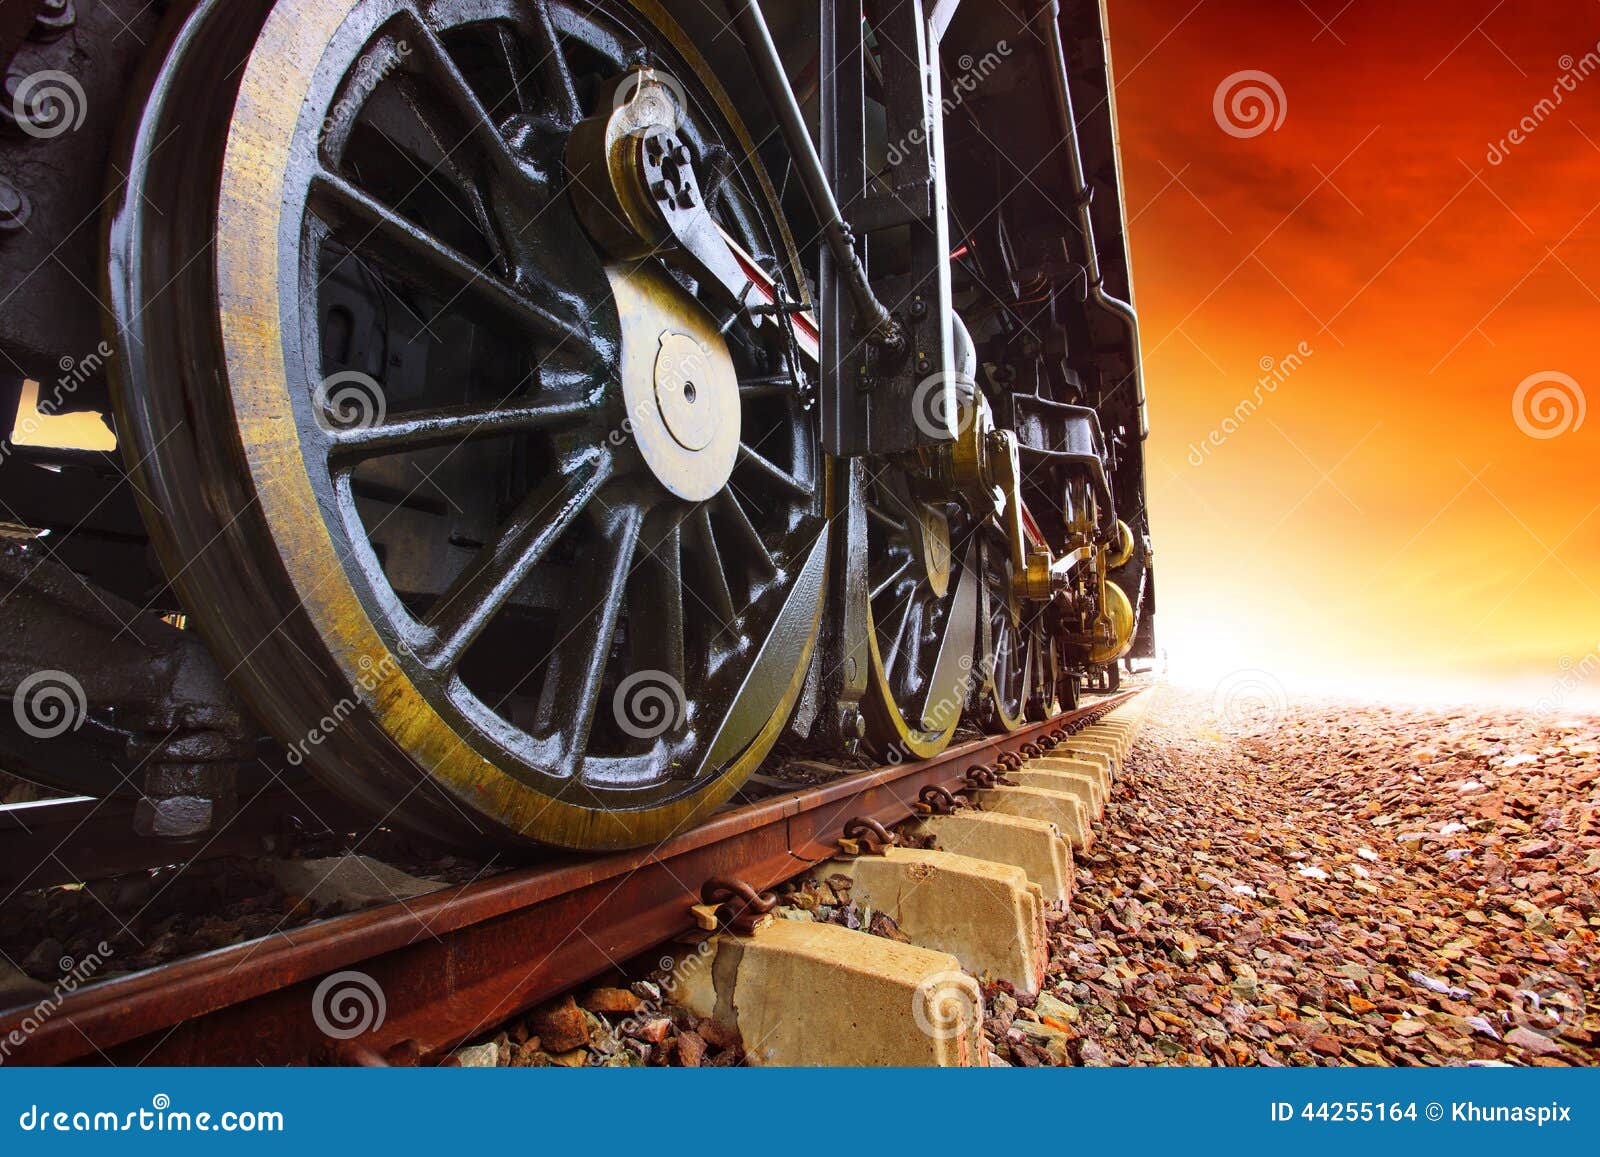 iron wheels of stream engine locomotive train on railways track